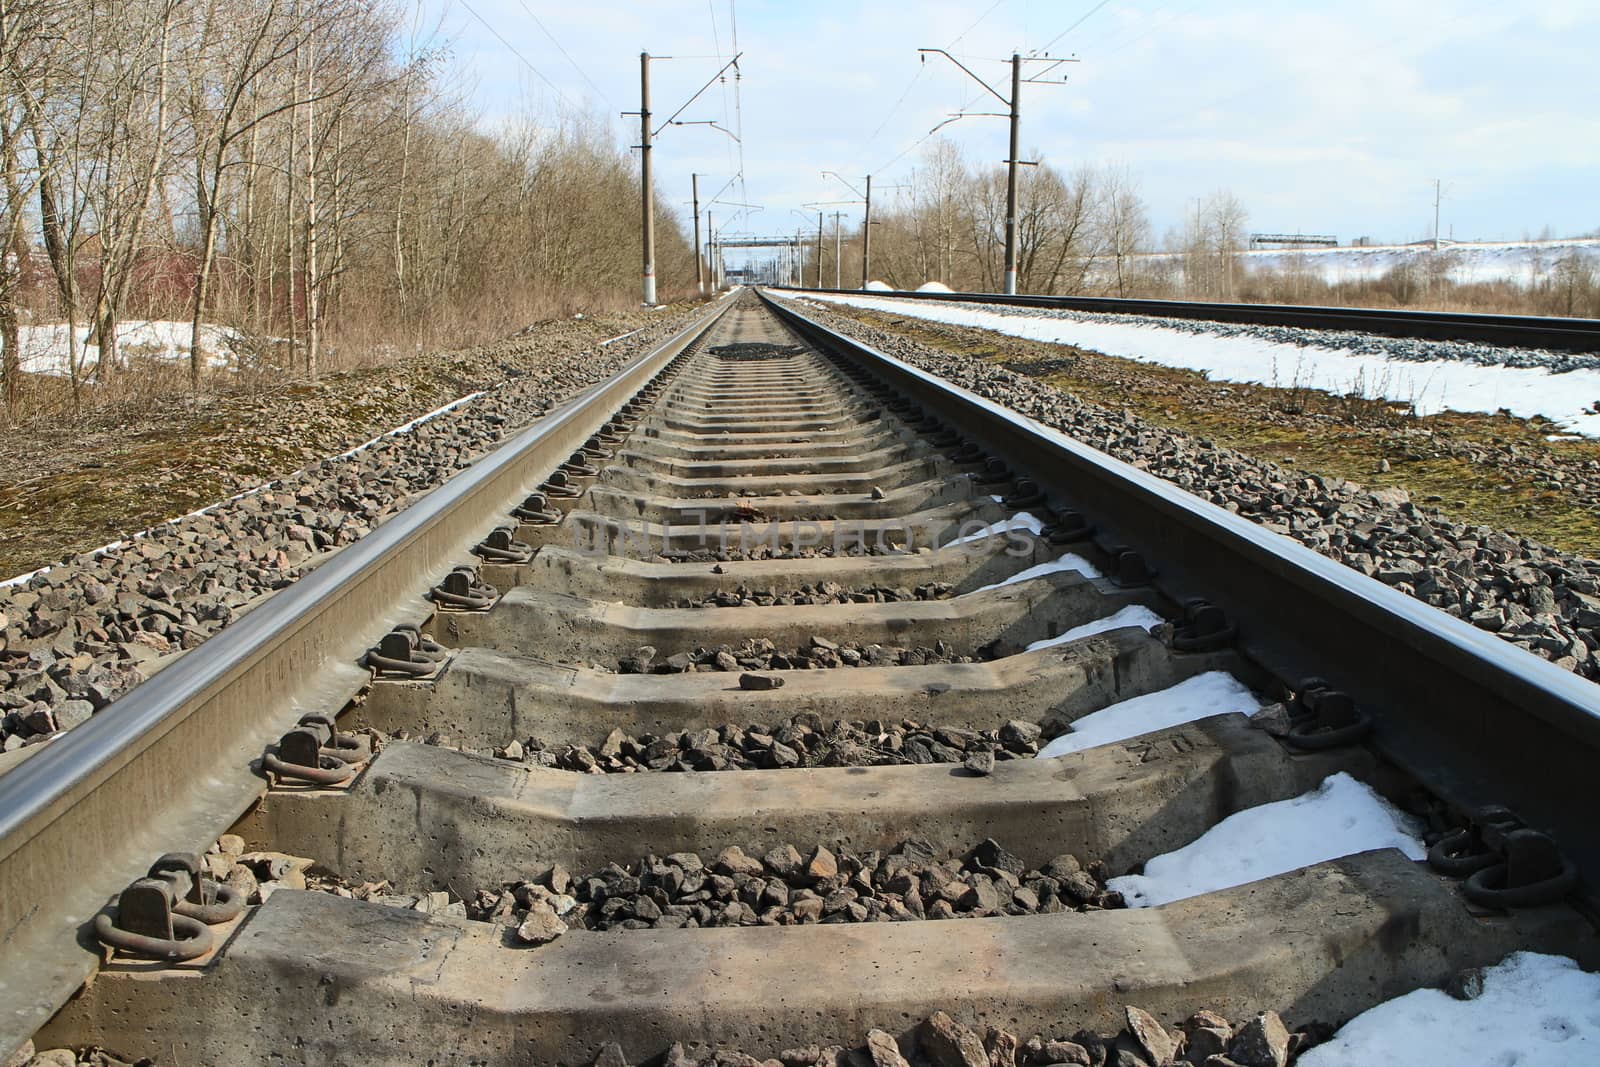 rails of railway forward go into distance